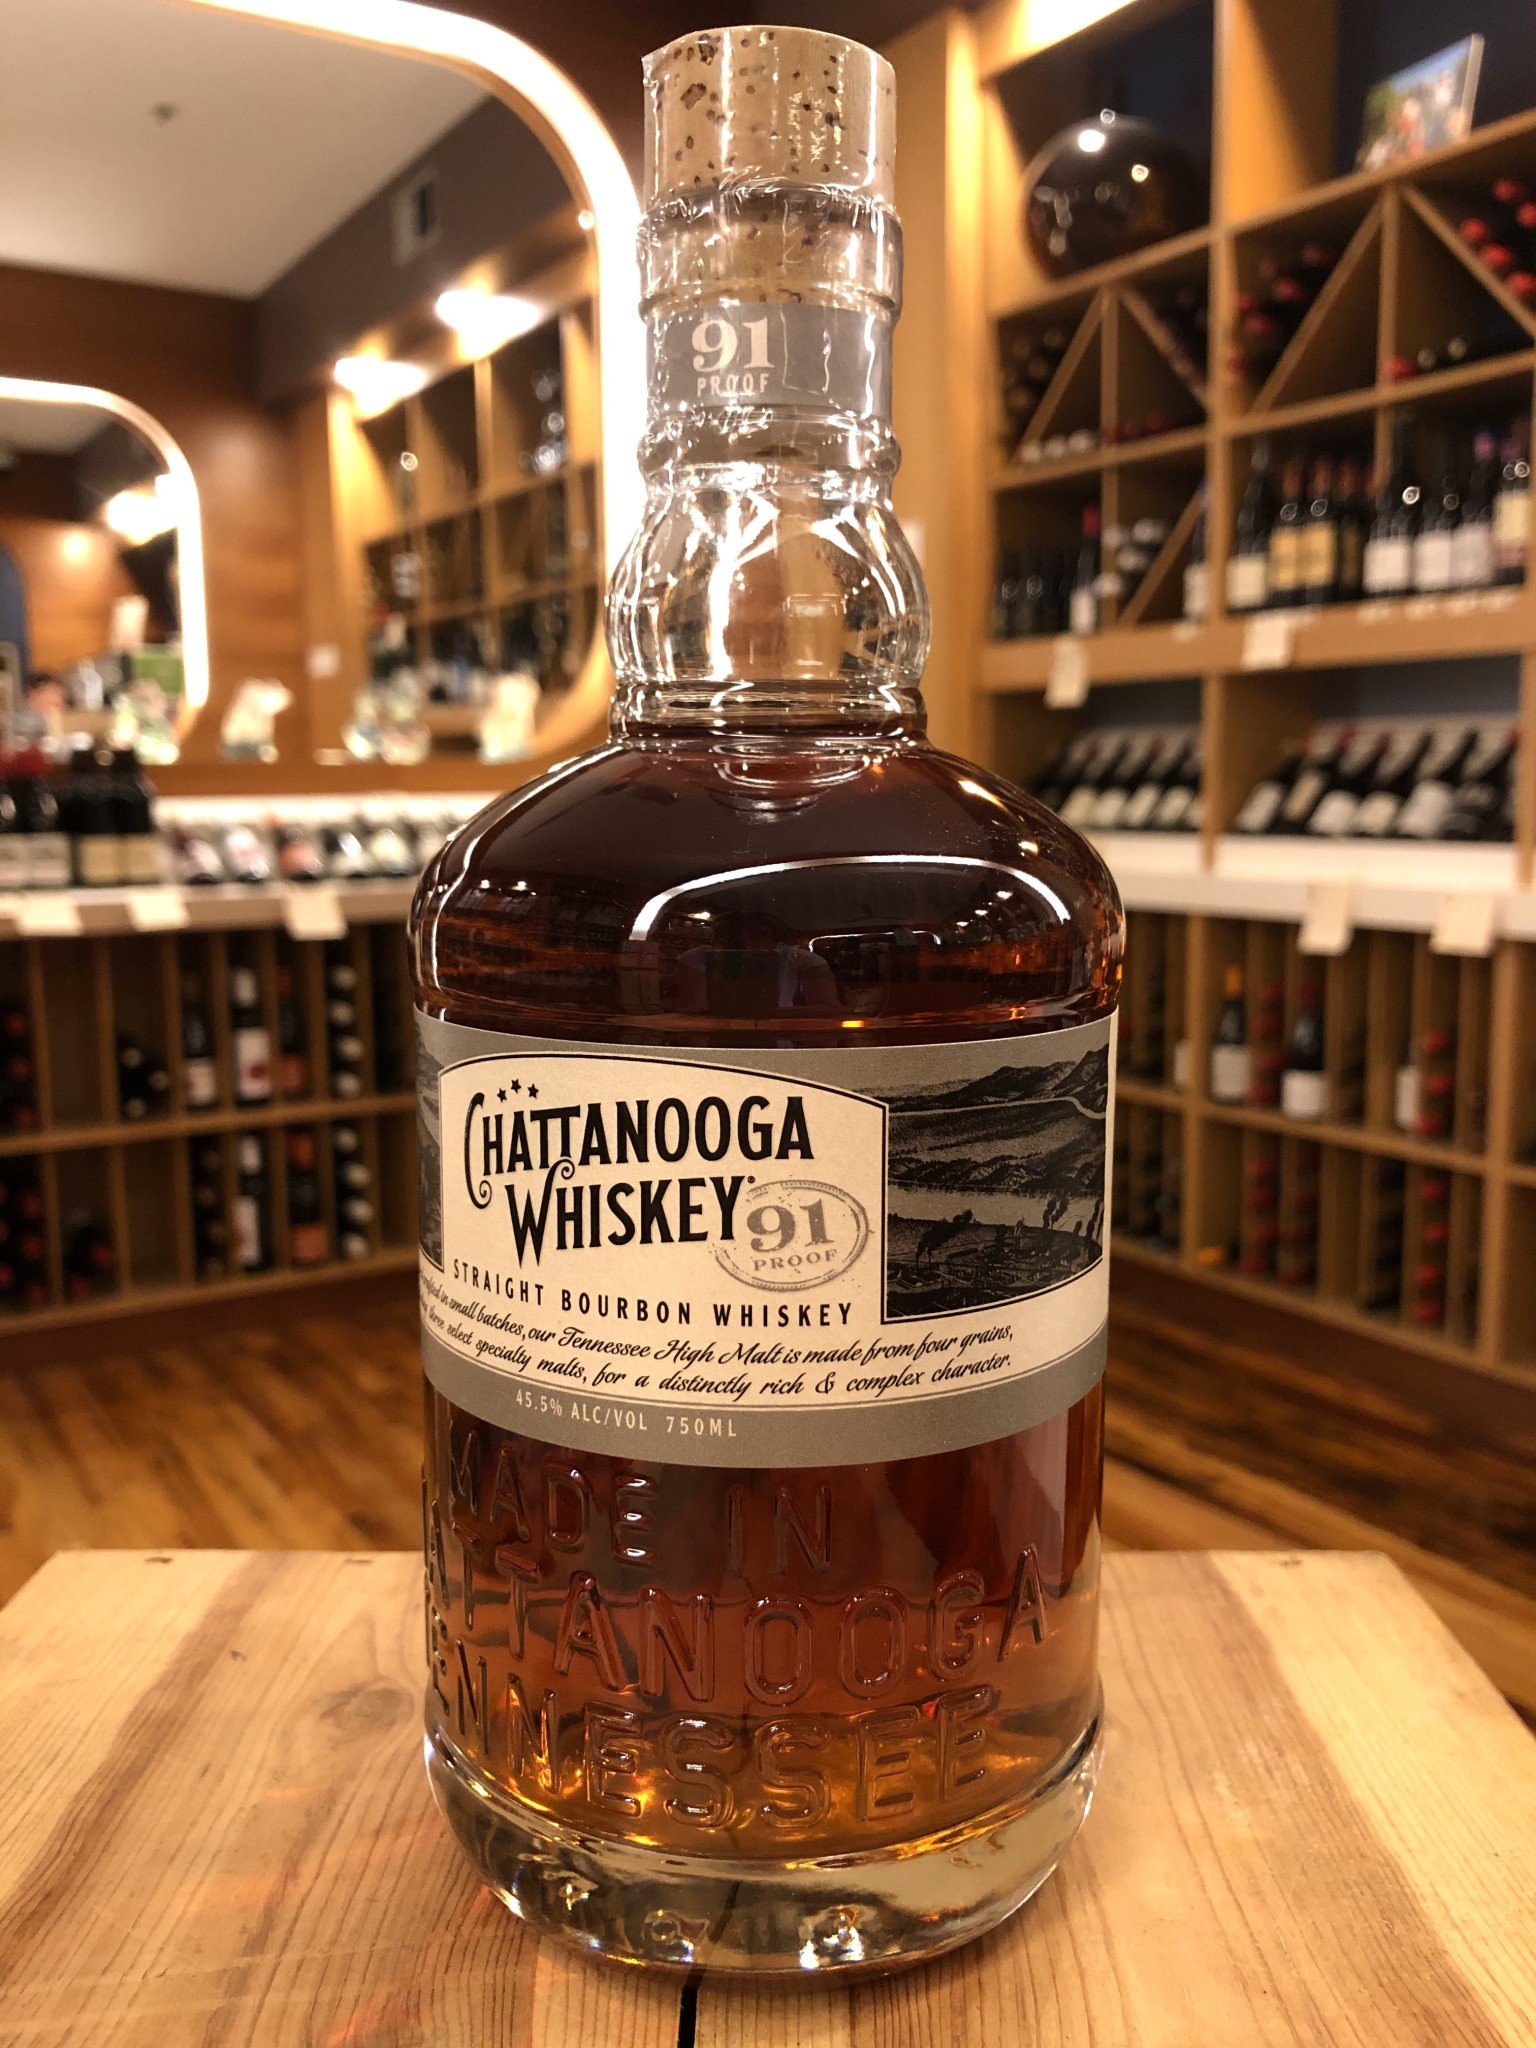 Chattanooga Whiskey 91pf